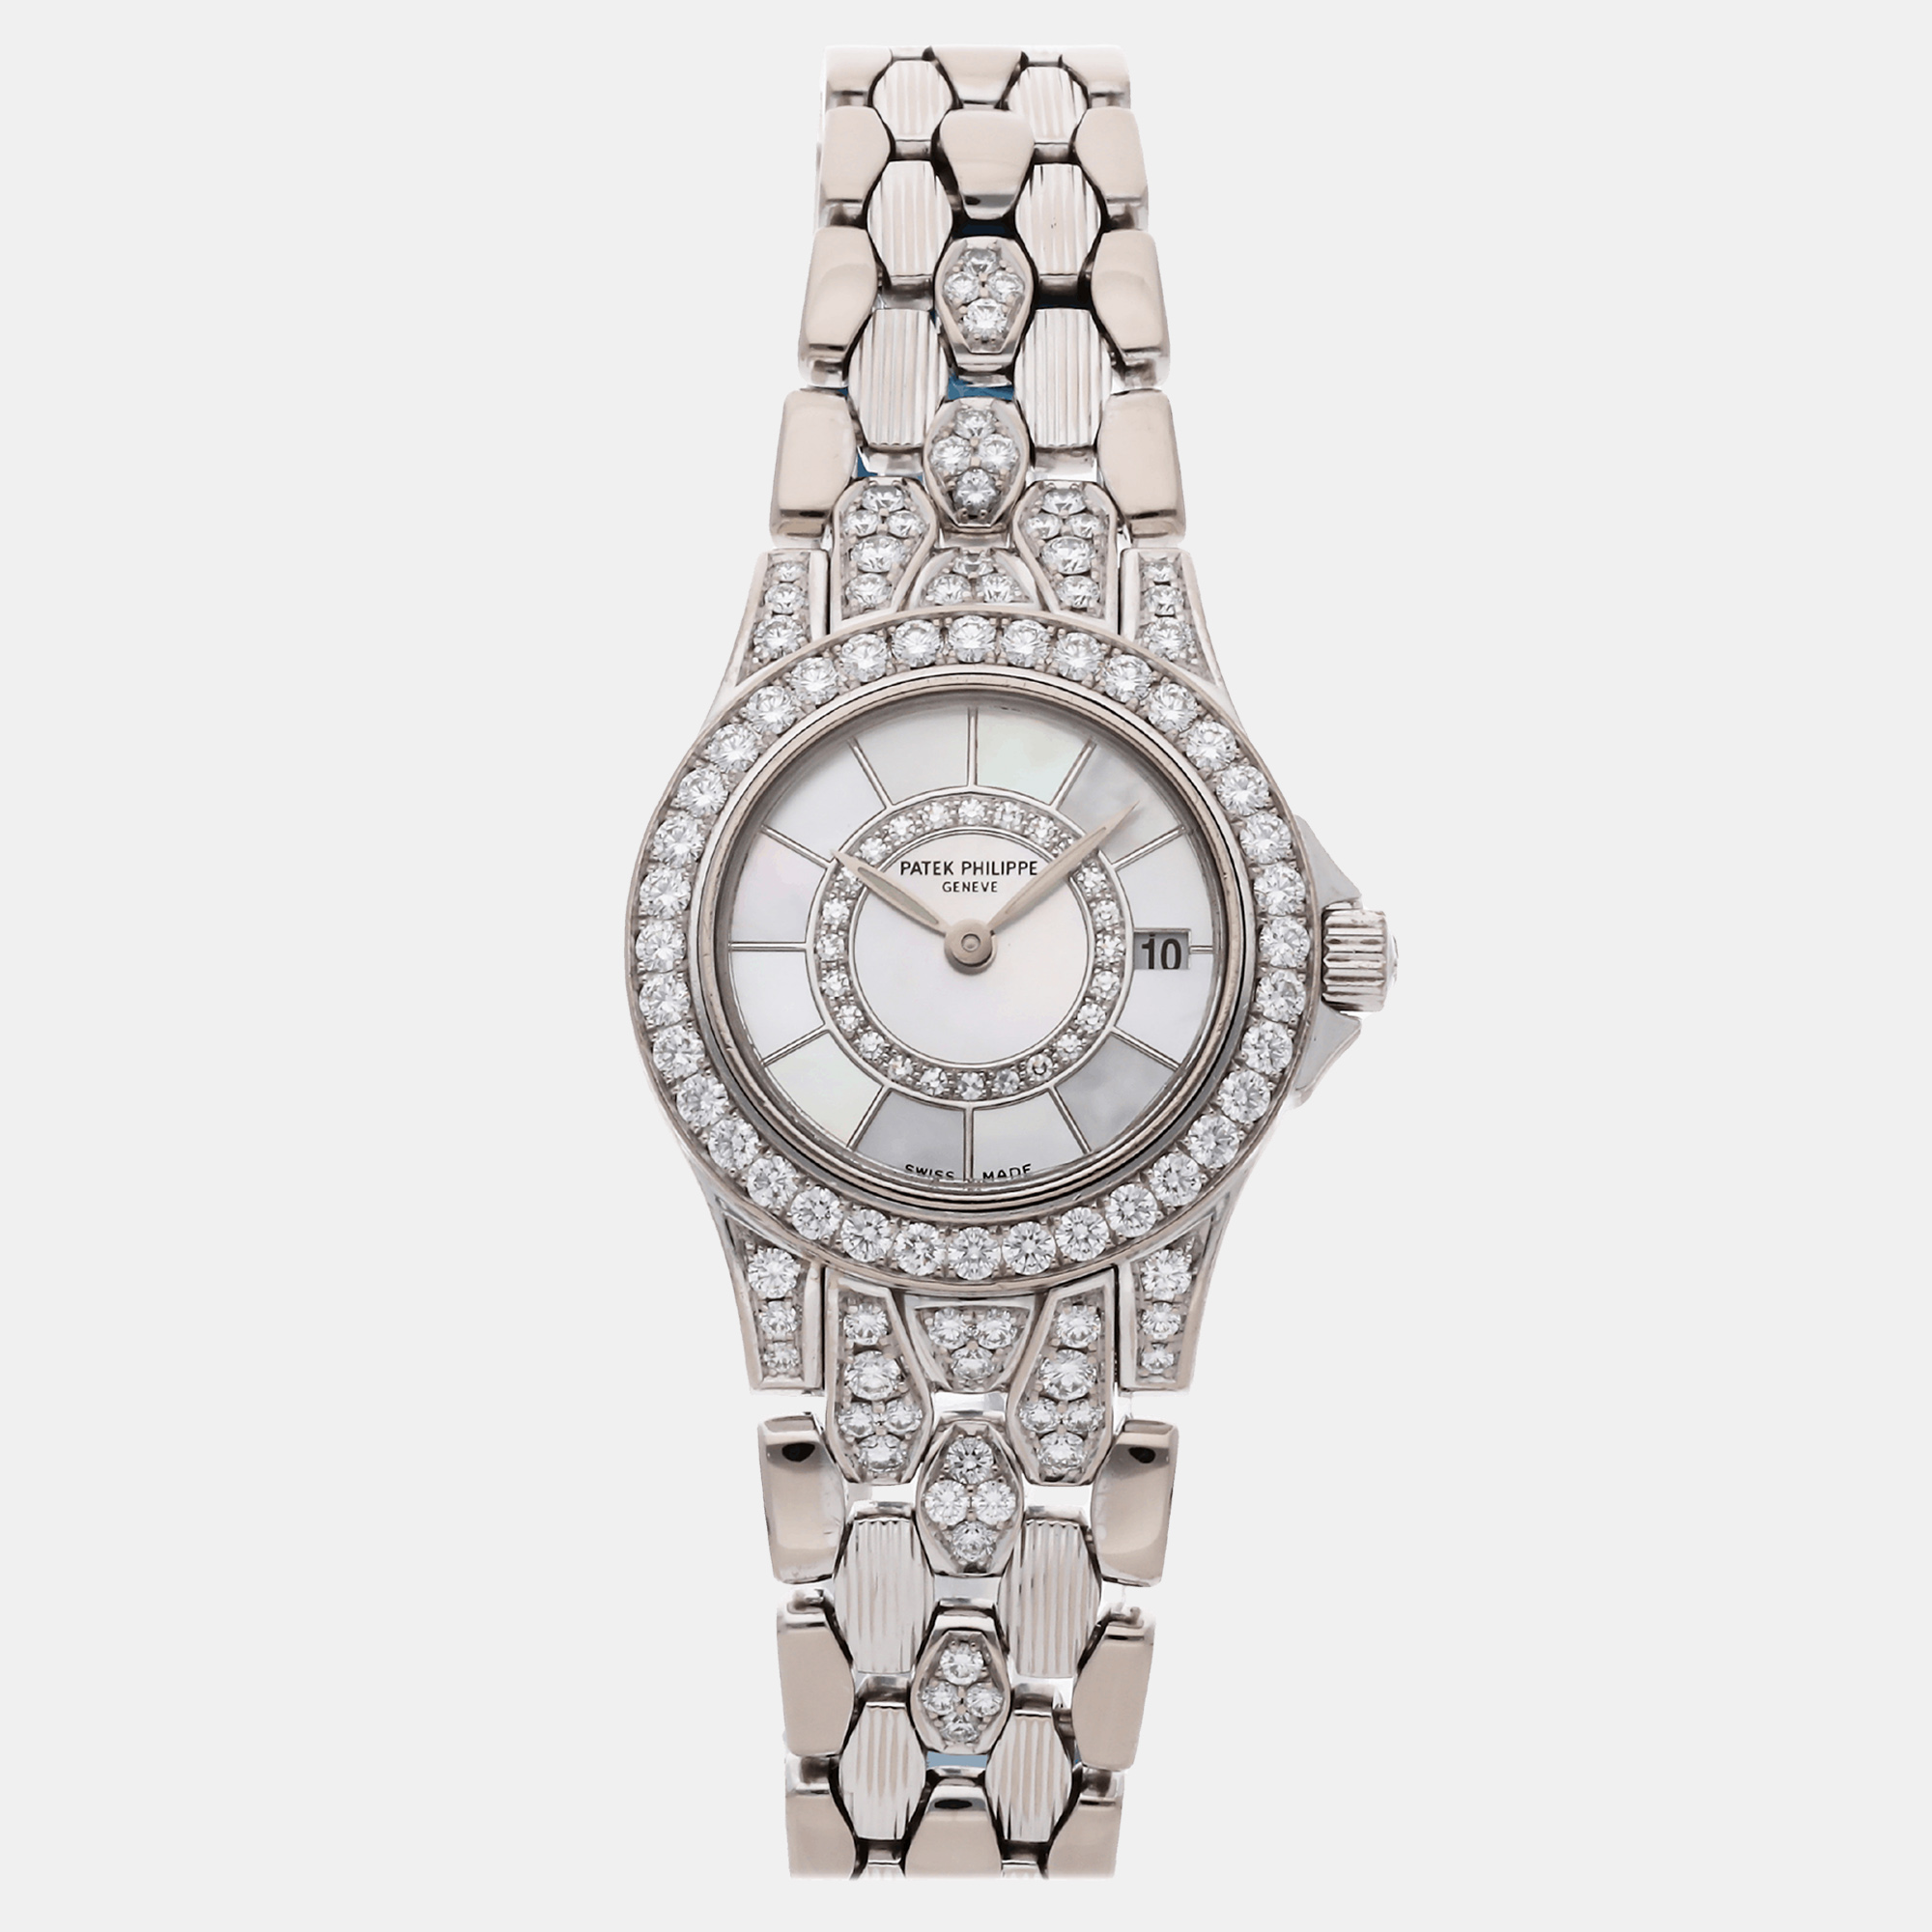 Patek philippe white mother of pearl 18k white gold  neptune 4881/120g-001 quartz women's wristwatch 26 mm